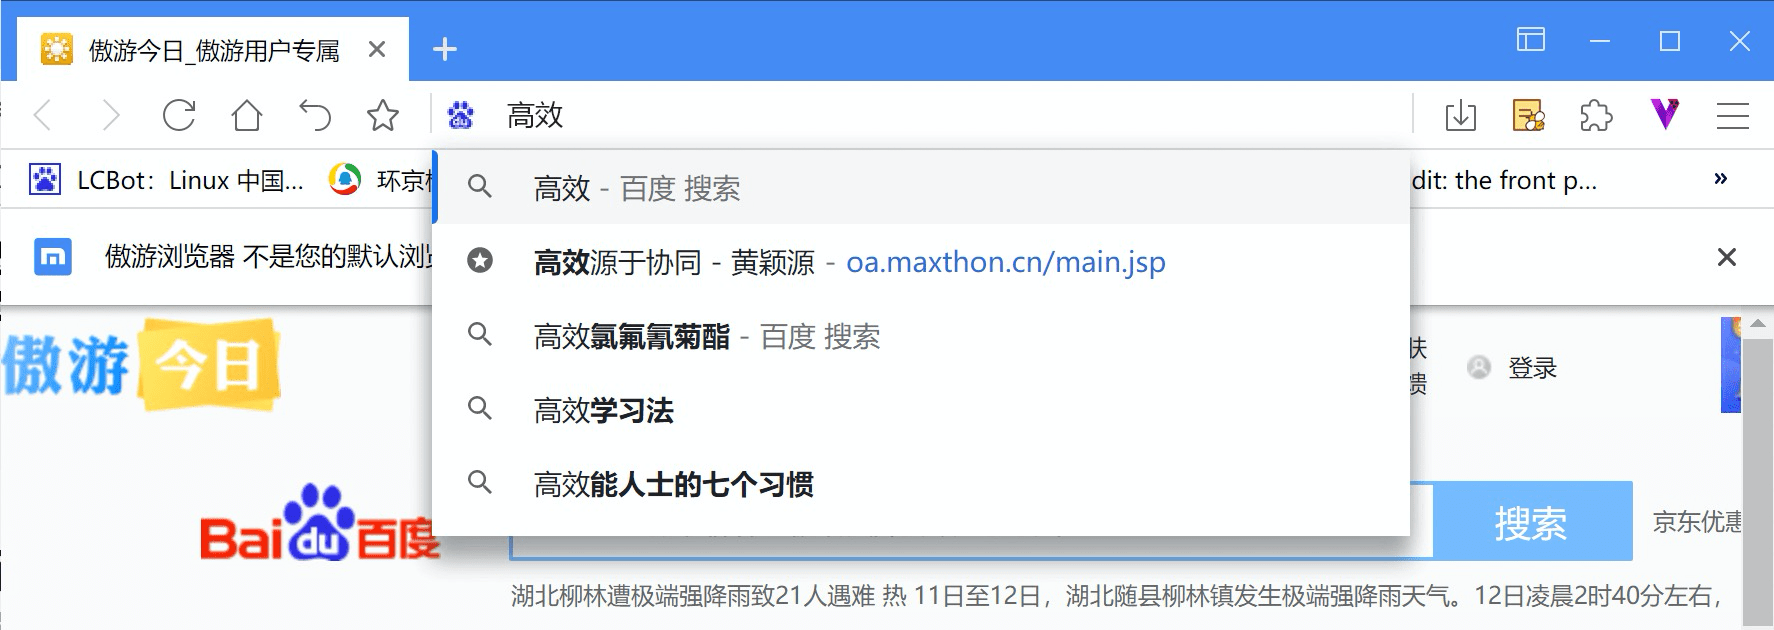 Maxthon浏览器七大特色功能使用指南